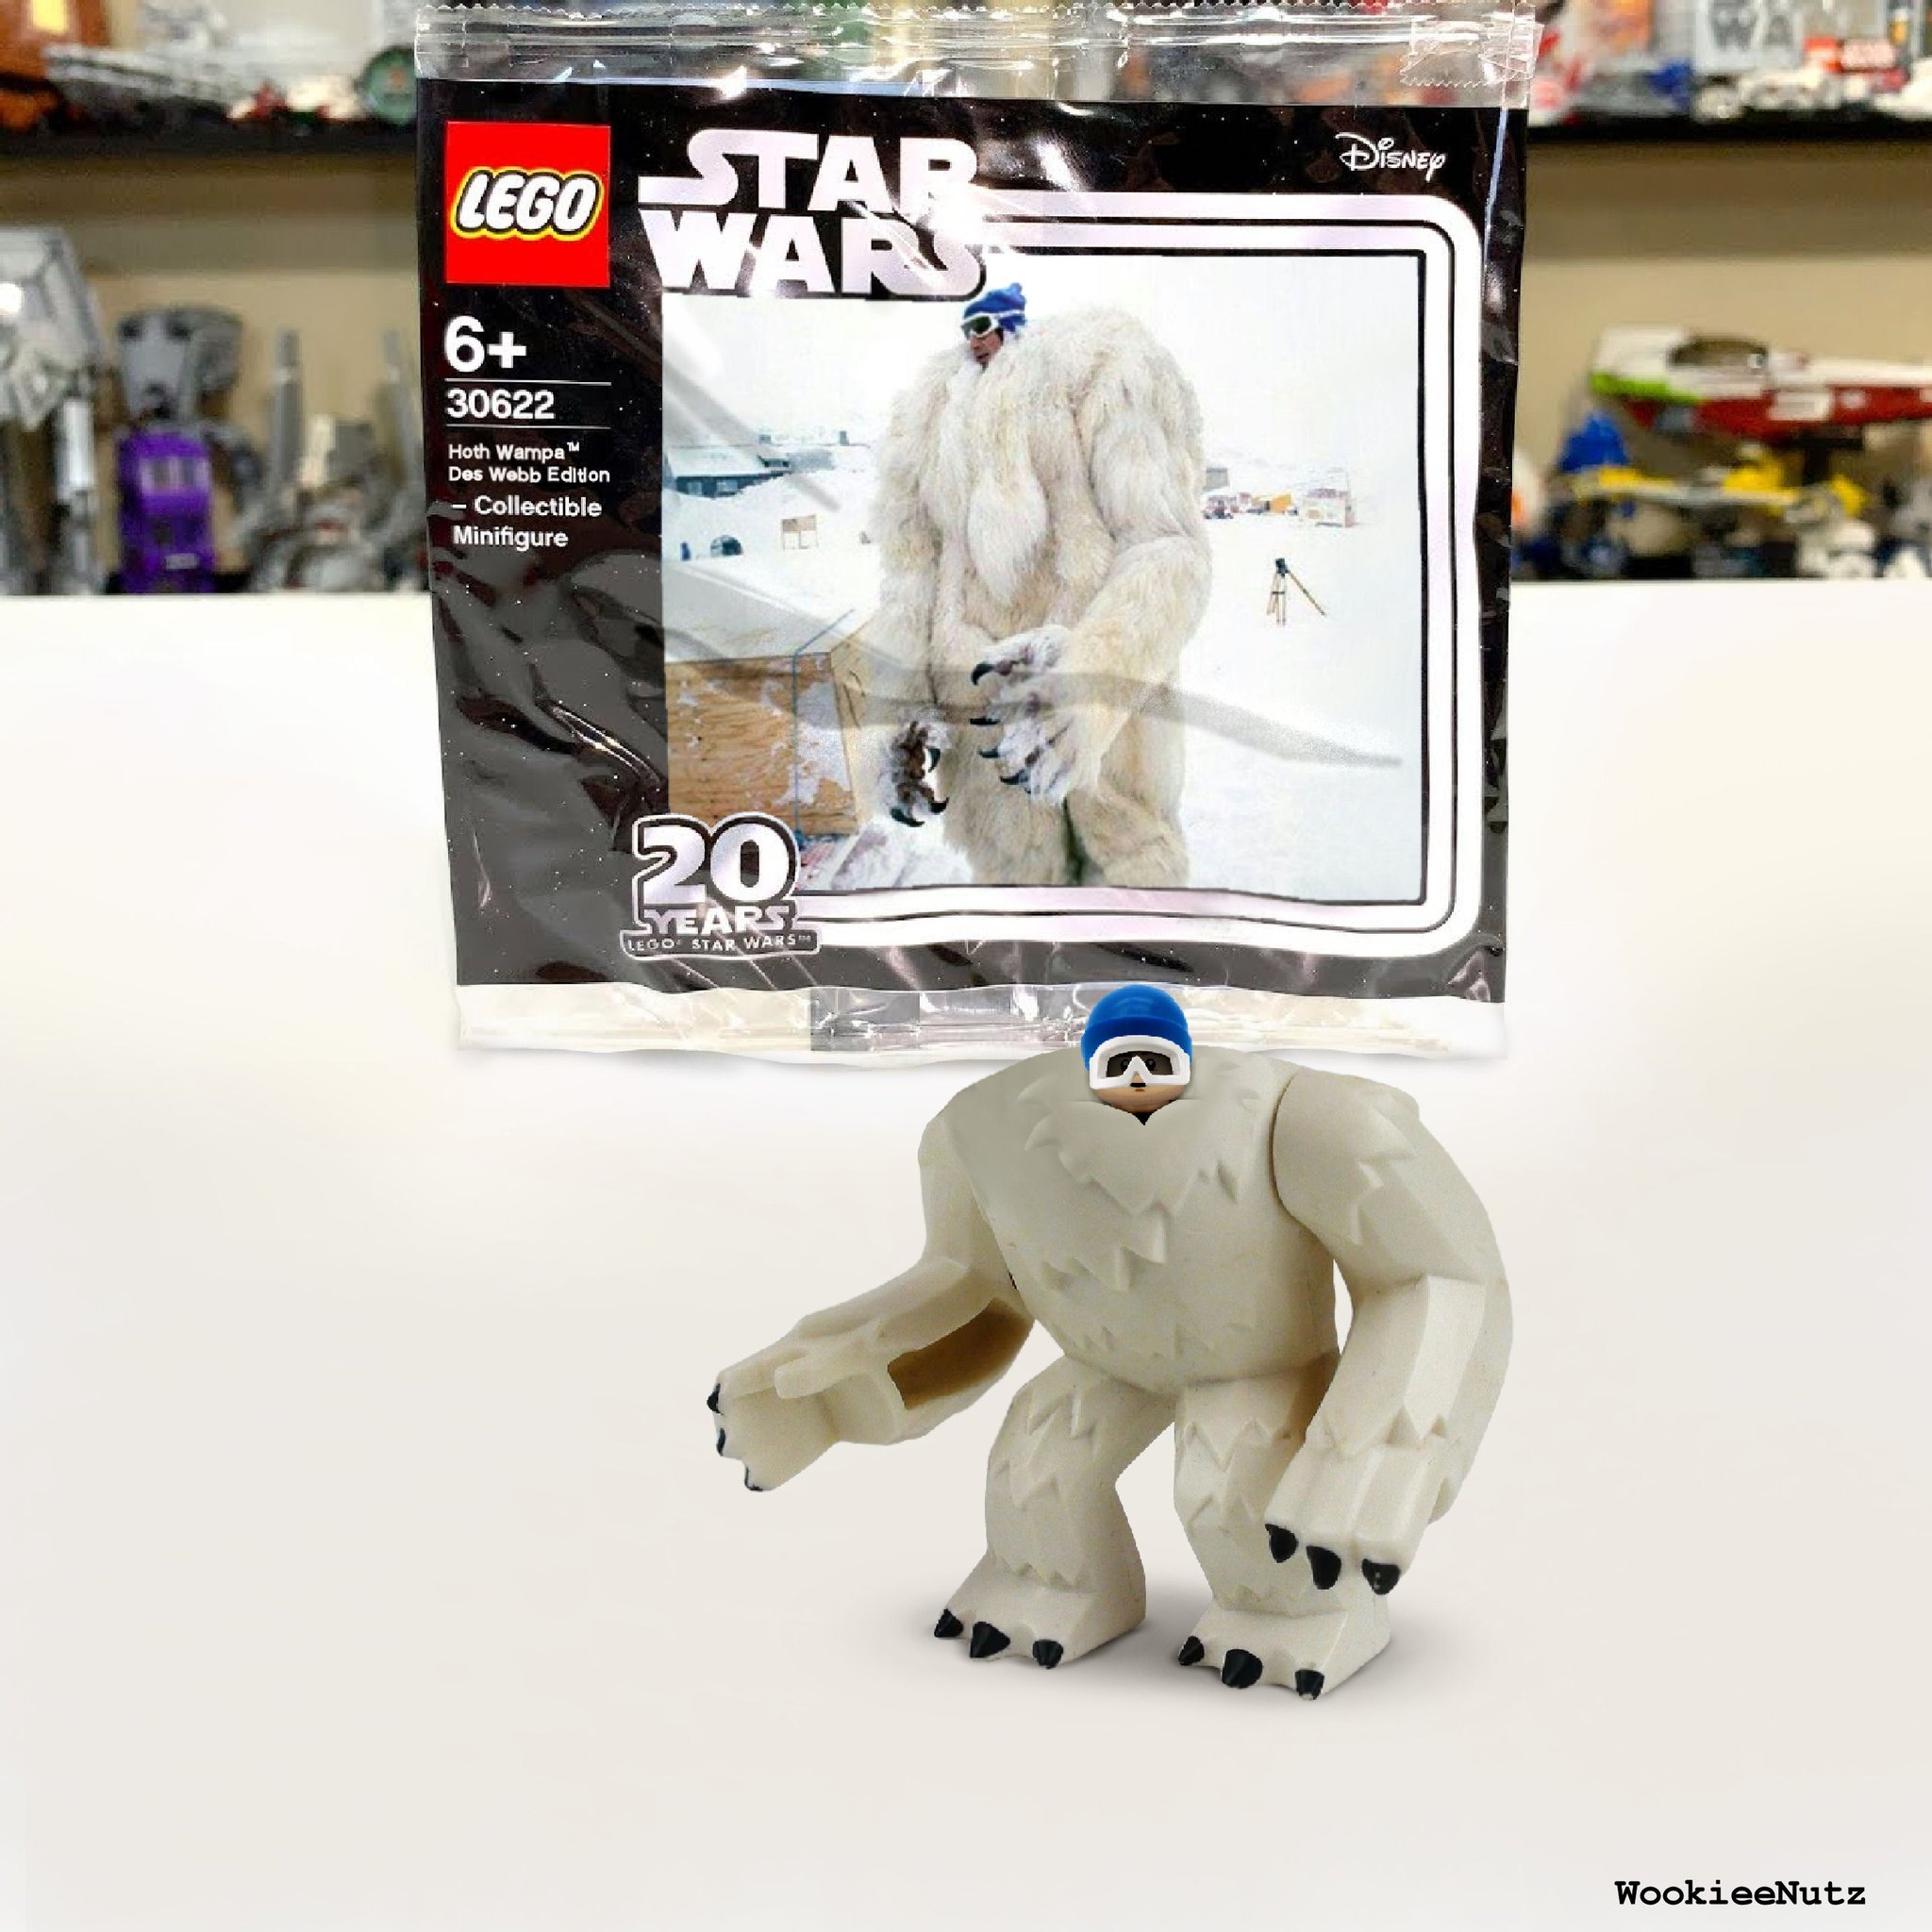 Star Wars Photo on Twitter: "#StarWars #Lego Hoth Wampa™ - edition https://t.co/gNtV4PRHV2" / Twitter